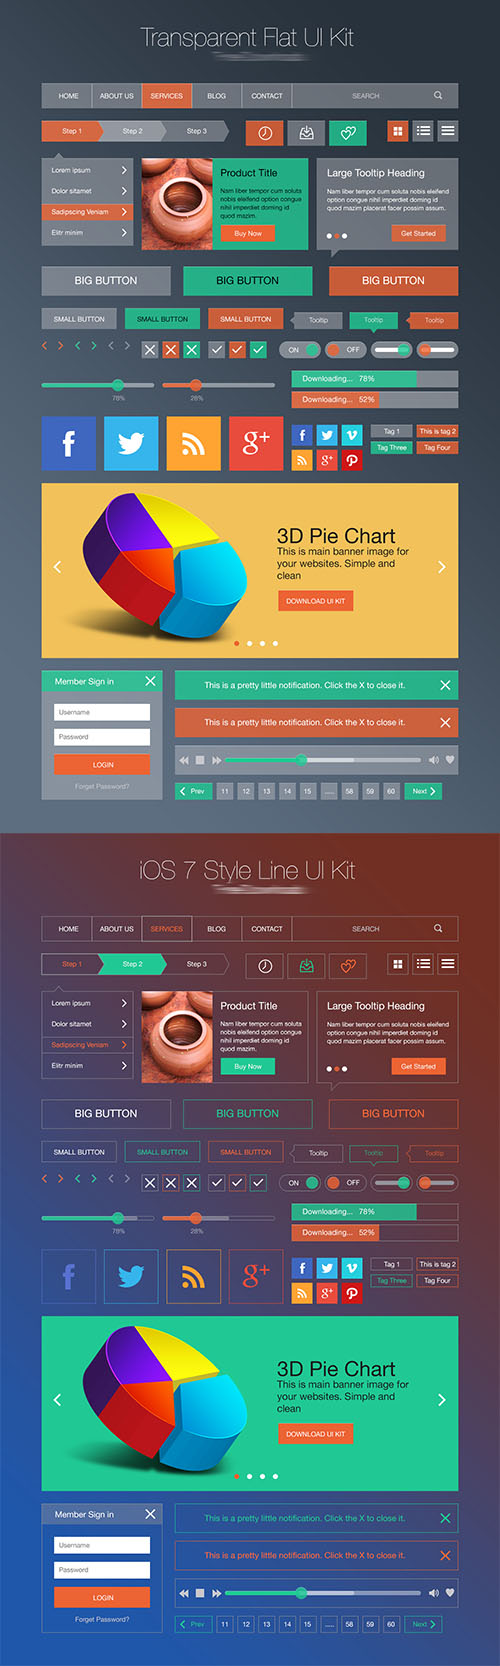 PSD Web Design - Flat Style & iOS 7 Line Style UI Kit